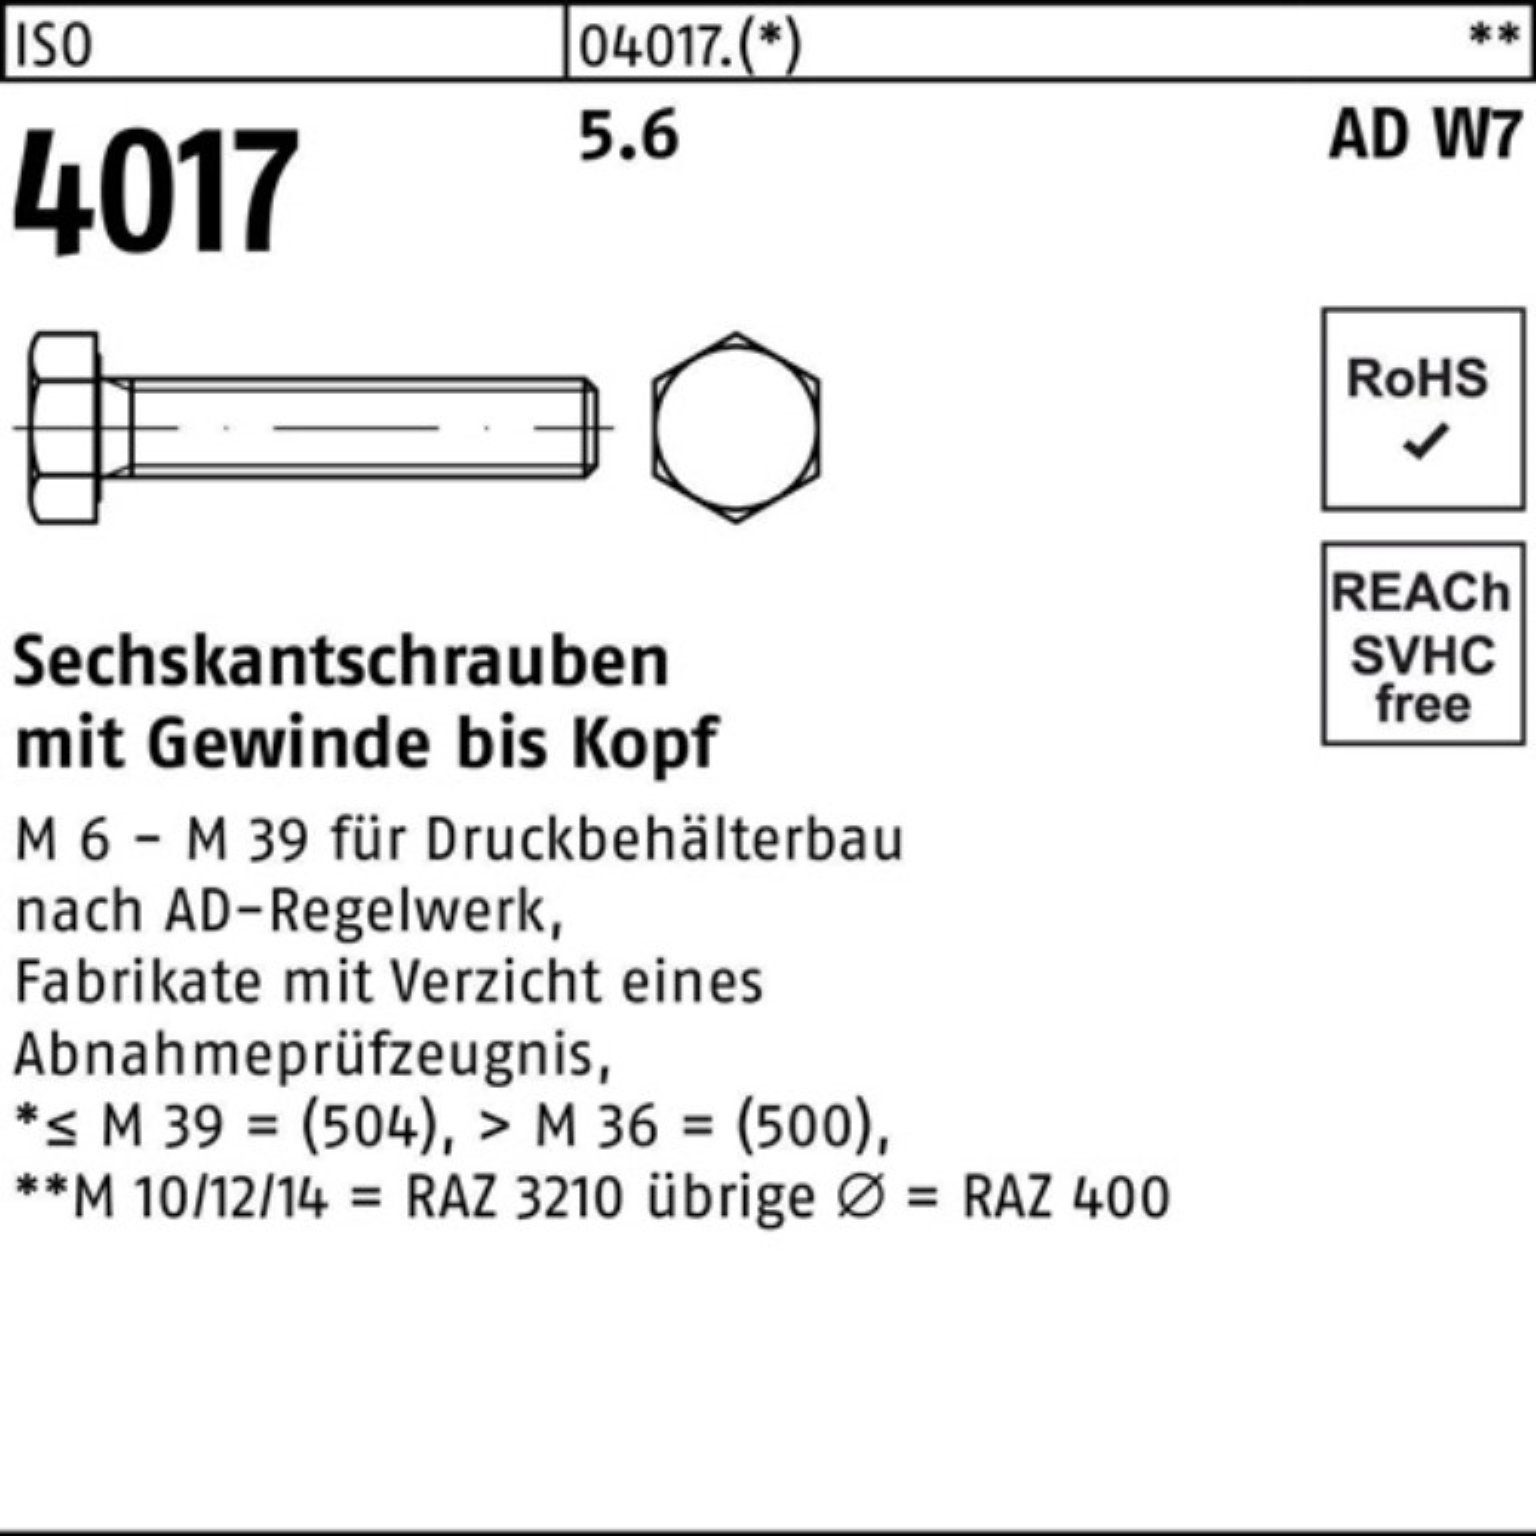 M12x 4017 Pack 5.6 100er ISO AD Stück 110 Sechskantschraube W7 Sechskantschraube 50 VG Bufab